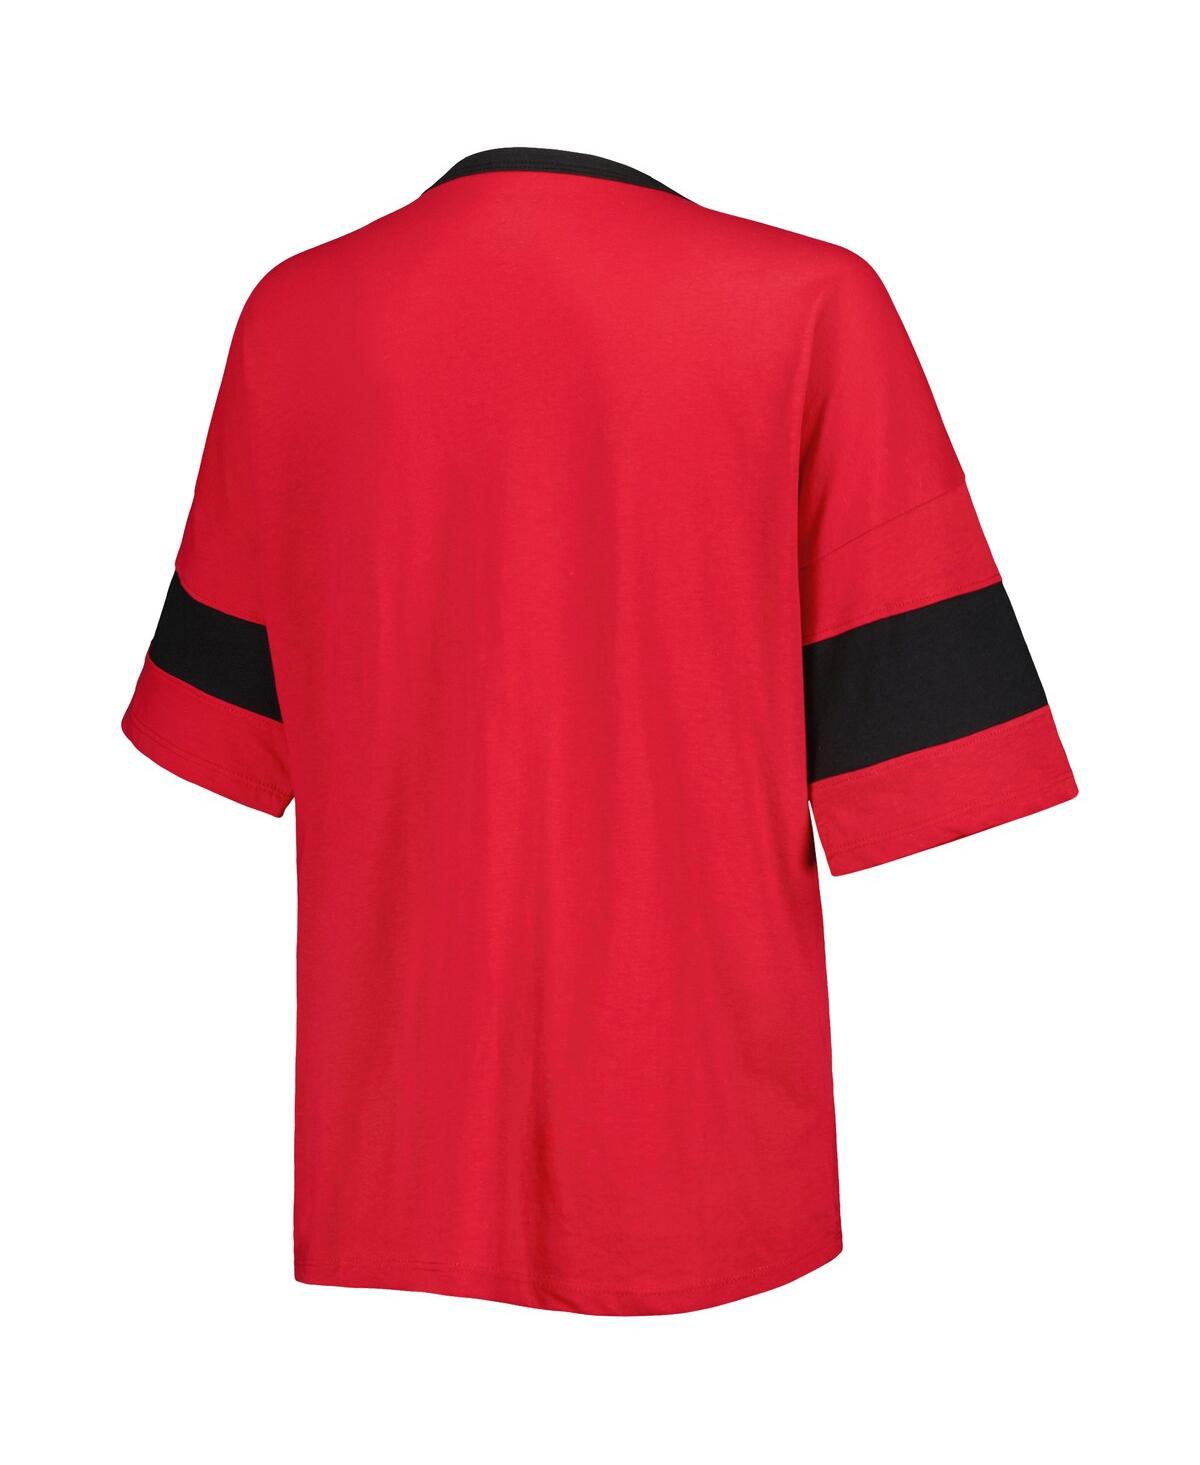 Shop Champion Women's  Red Georgia Bulldogs Jumbo Arch Striped Half-sleeve T-shirt